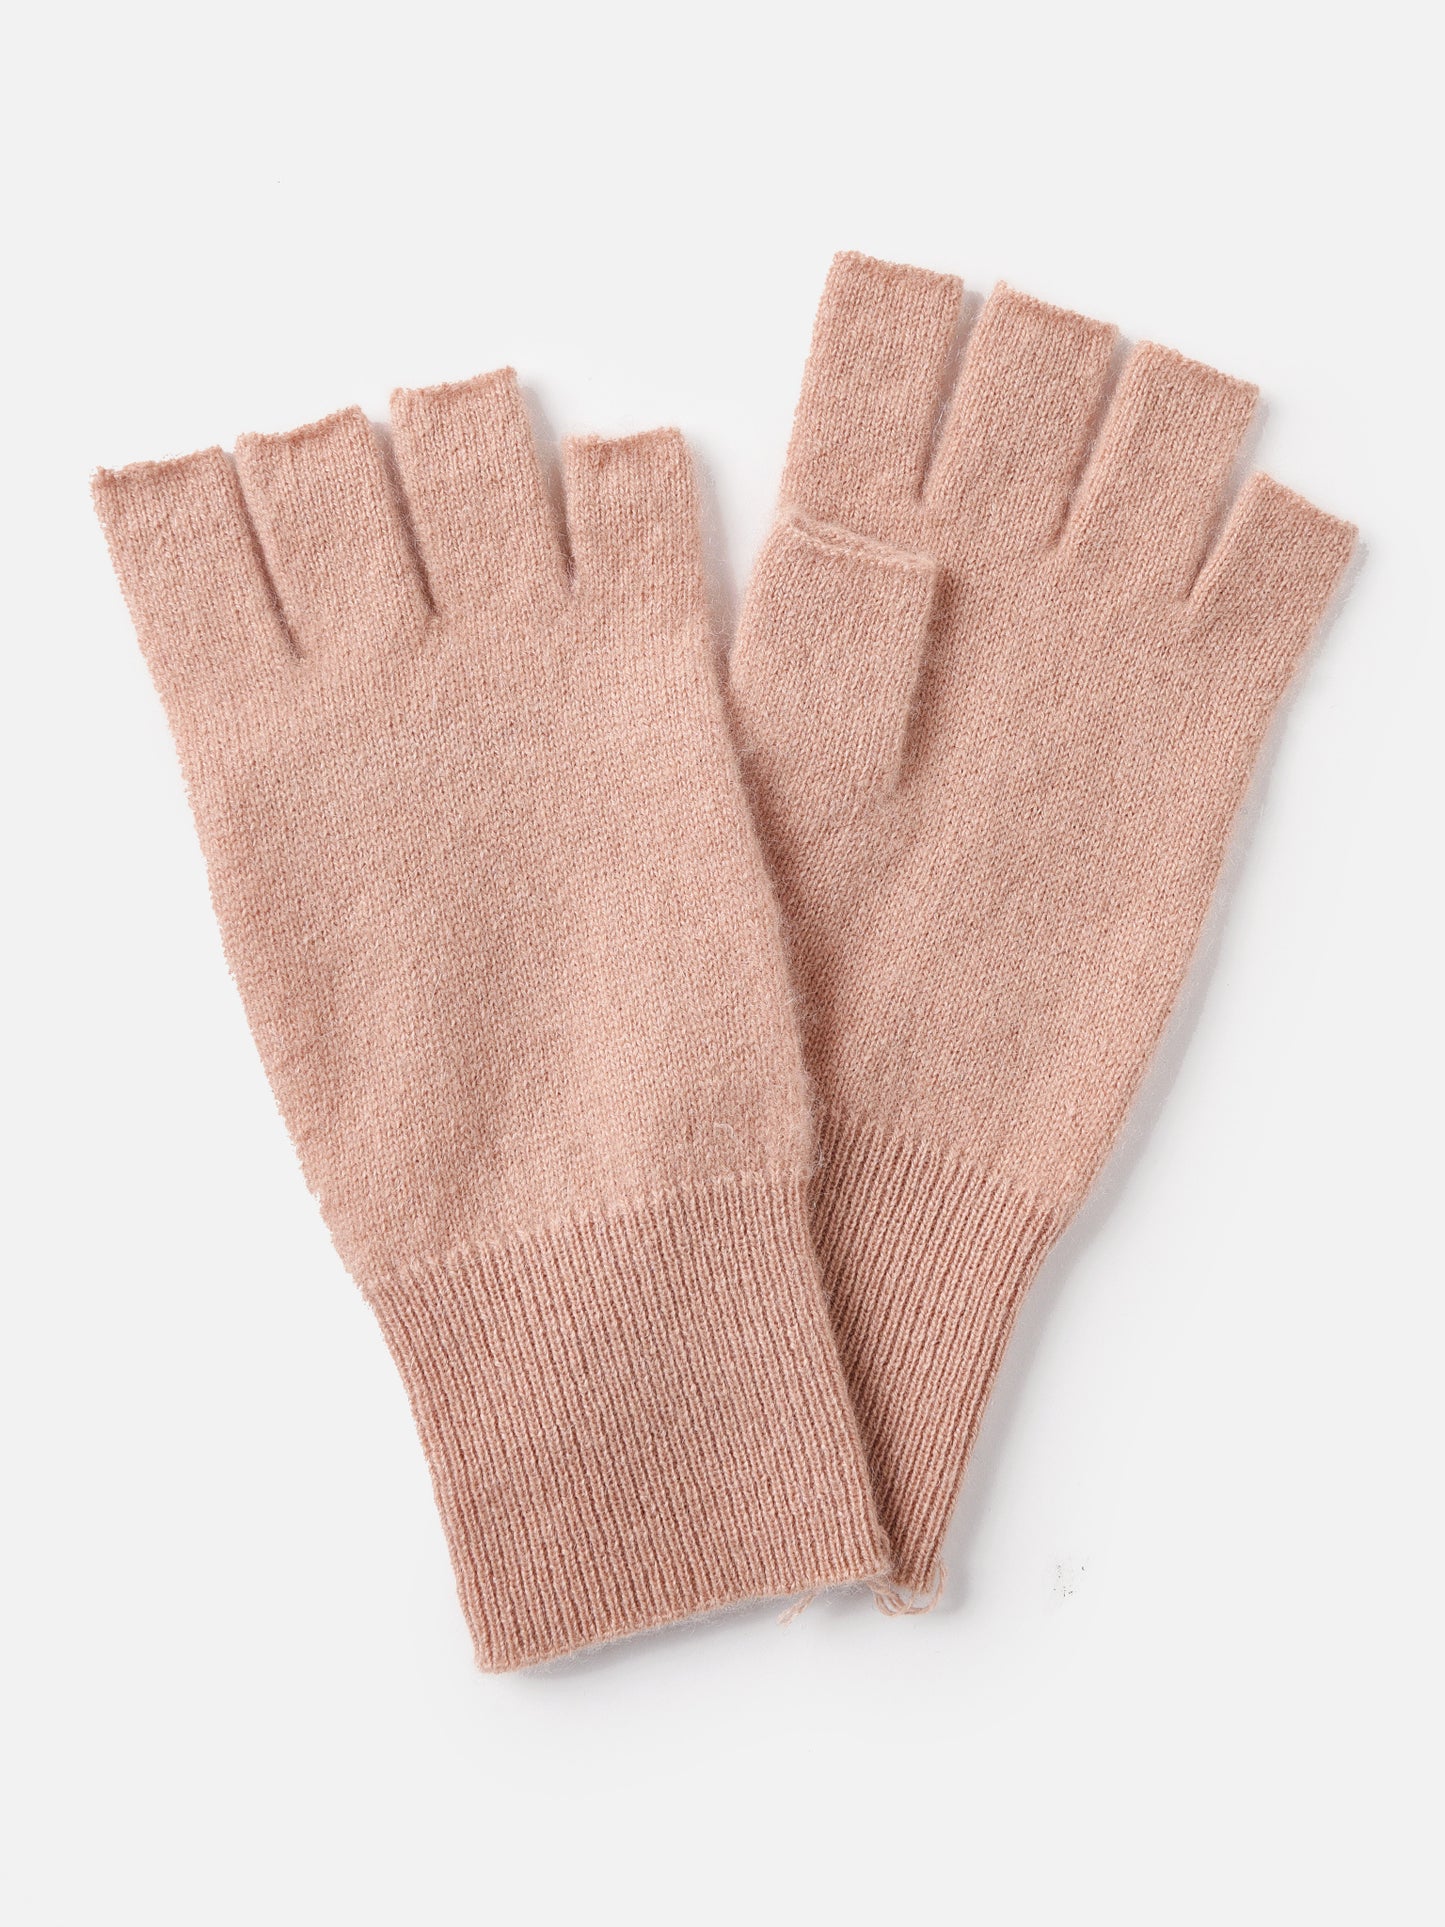 White + Warren Fingerless Glove